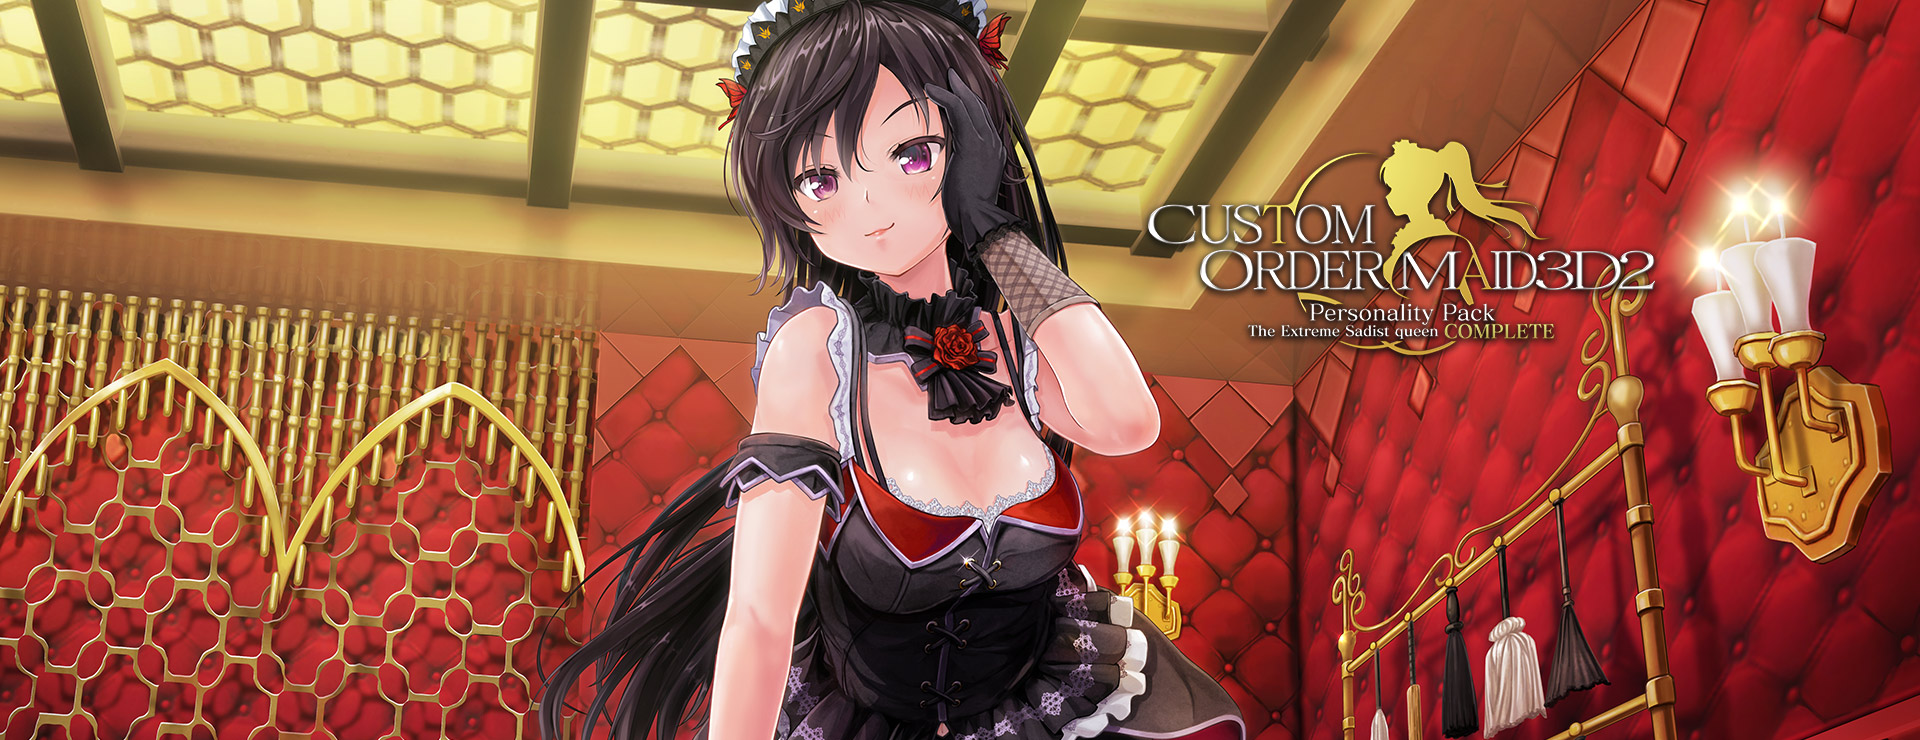 Custom Order Maid 3D 2 - Extreme Sadist Queen Complete Bundle - 仿真游戏 遊戲